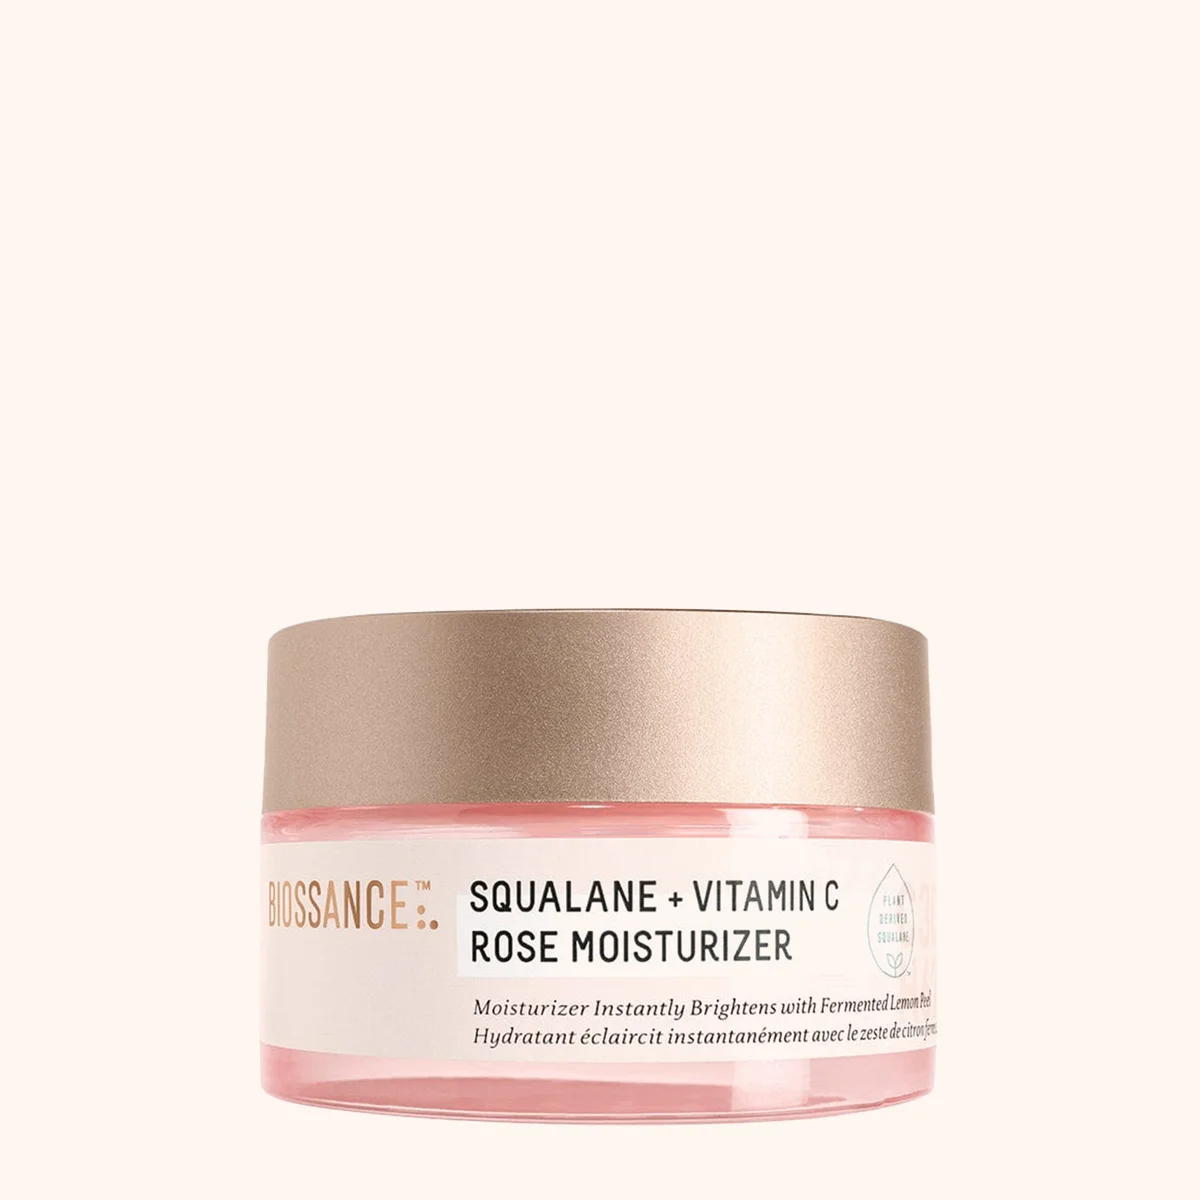 Squalane + Vitamin C Rose Moisturizer 50ml Image 1